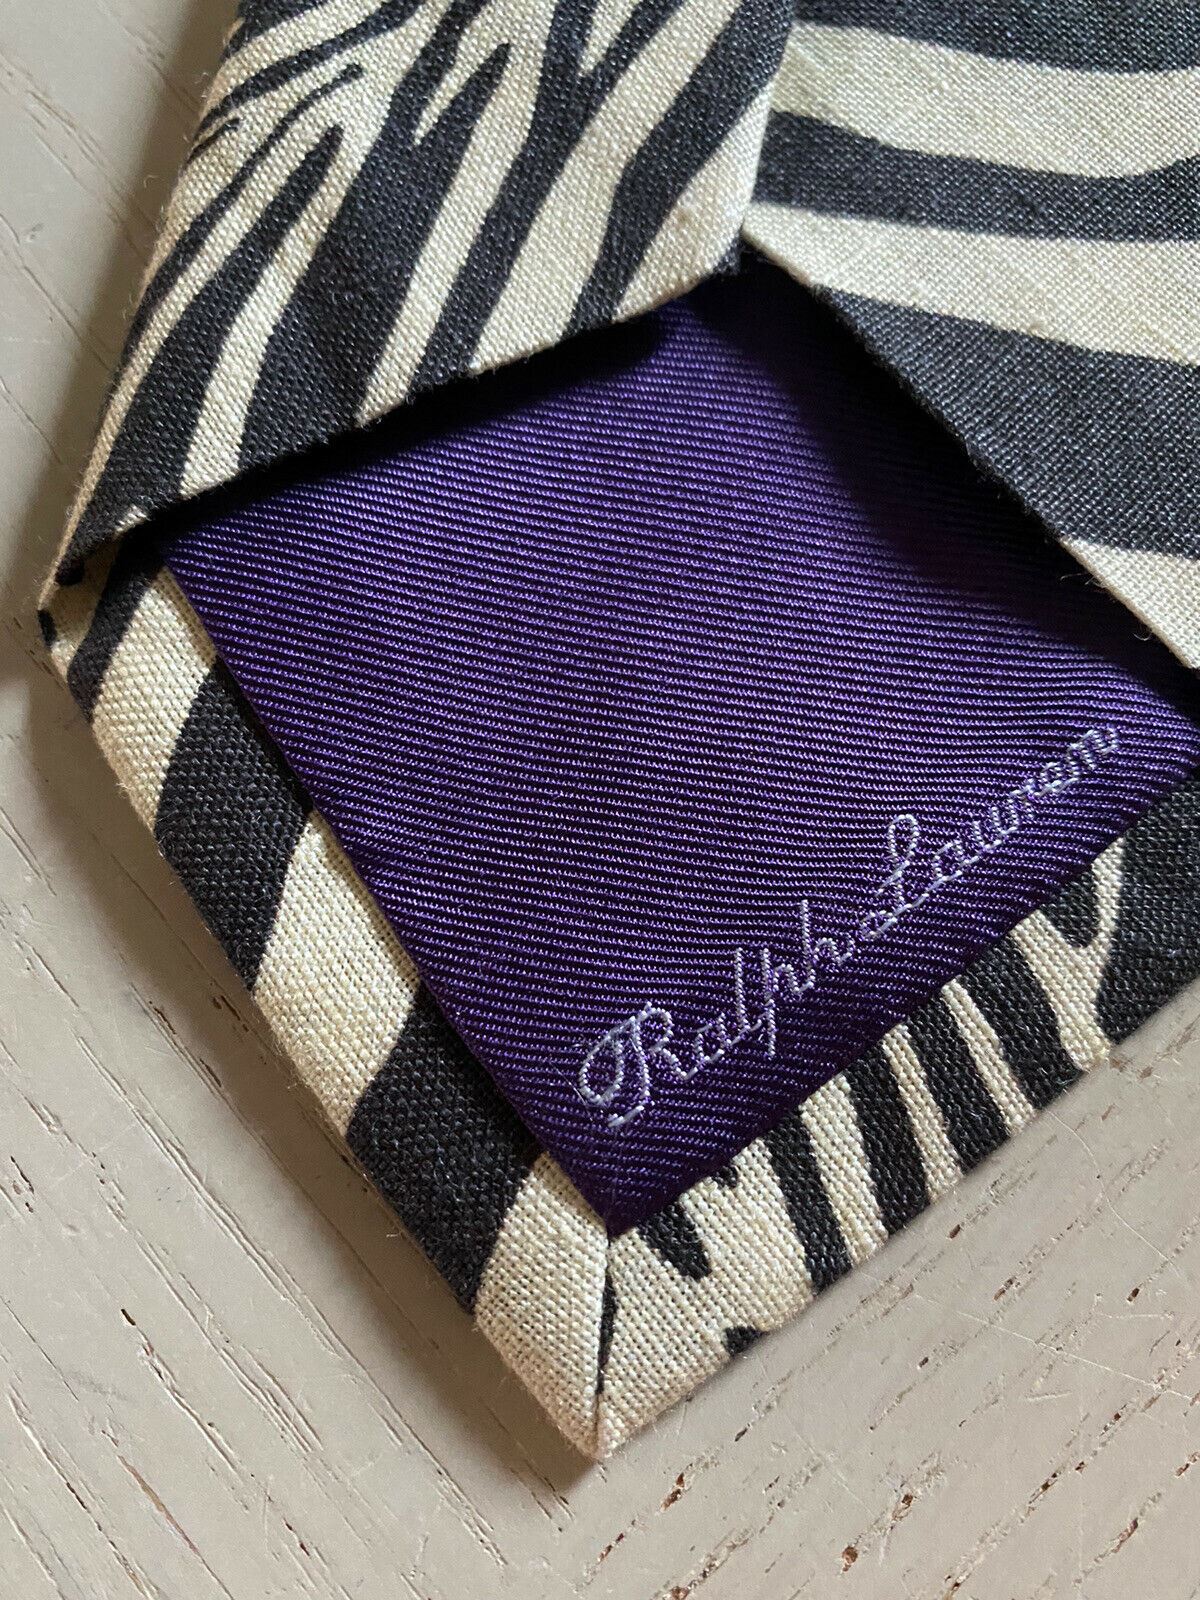 New $199 Ralph Lauren Purple Label Linen Neck Tie Black/White Hand made in Italy